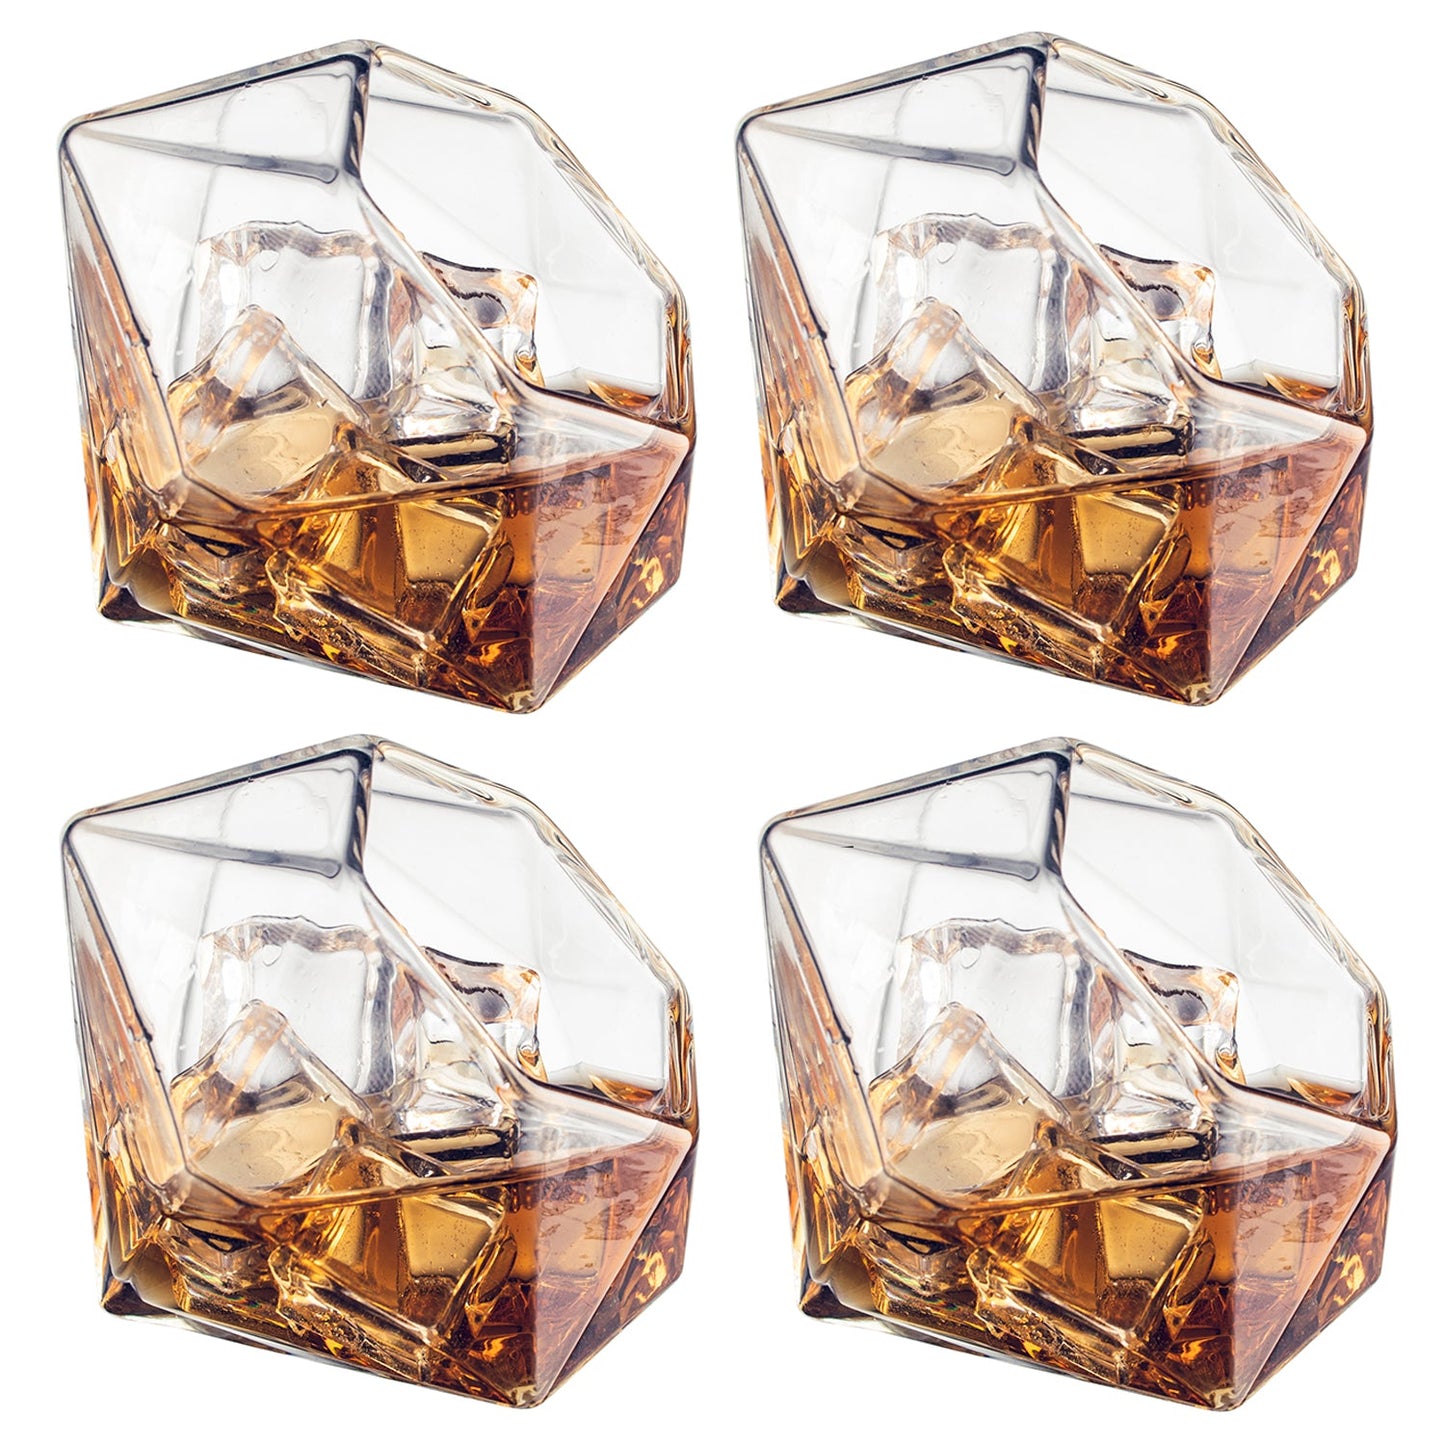 Diamond Glasses (Set of 4) - by The Wine Savant